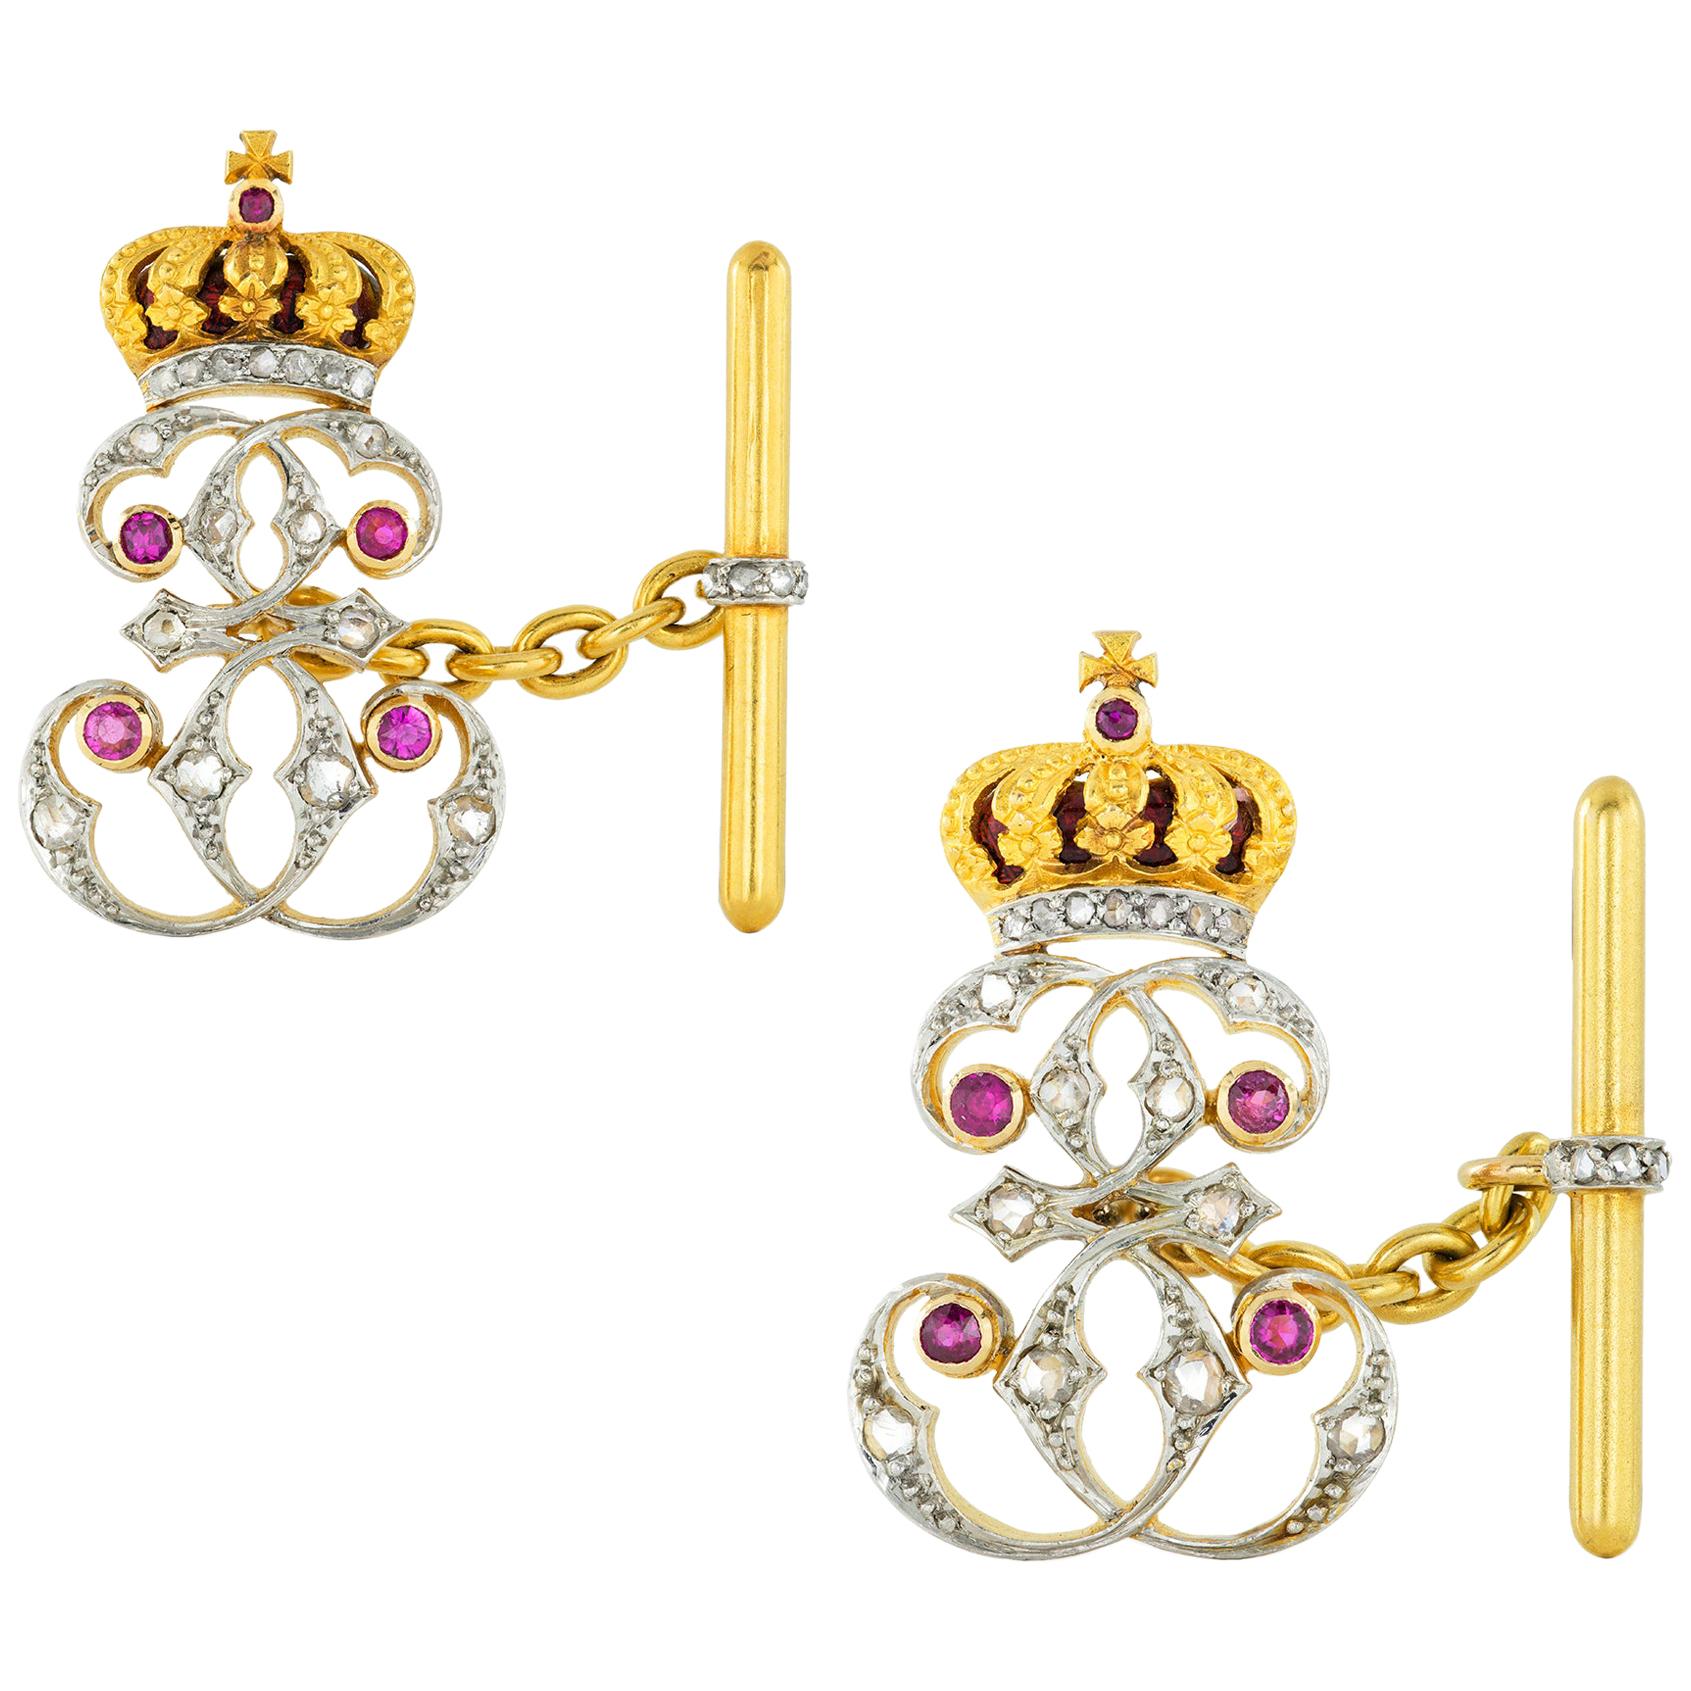 Pair of Queen Elizabeth of Romania Presentation Cufflinks For Sale